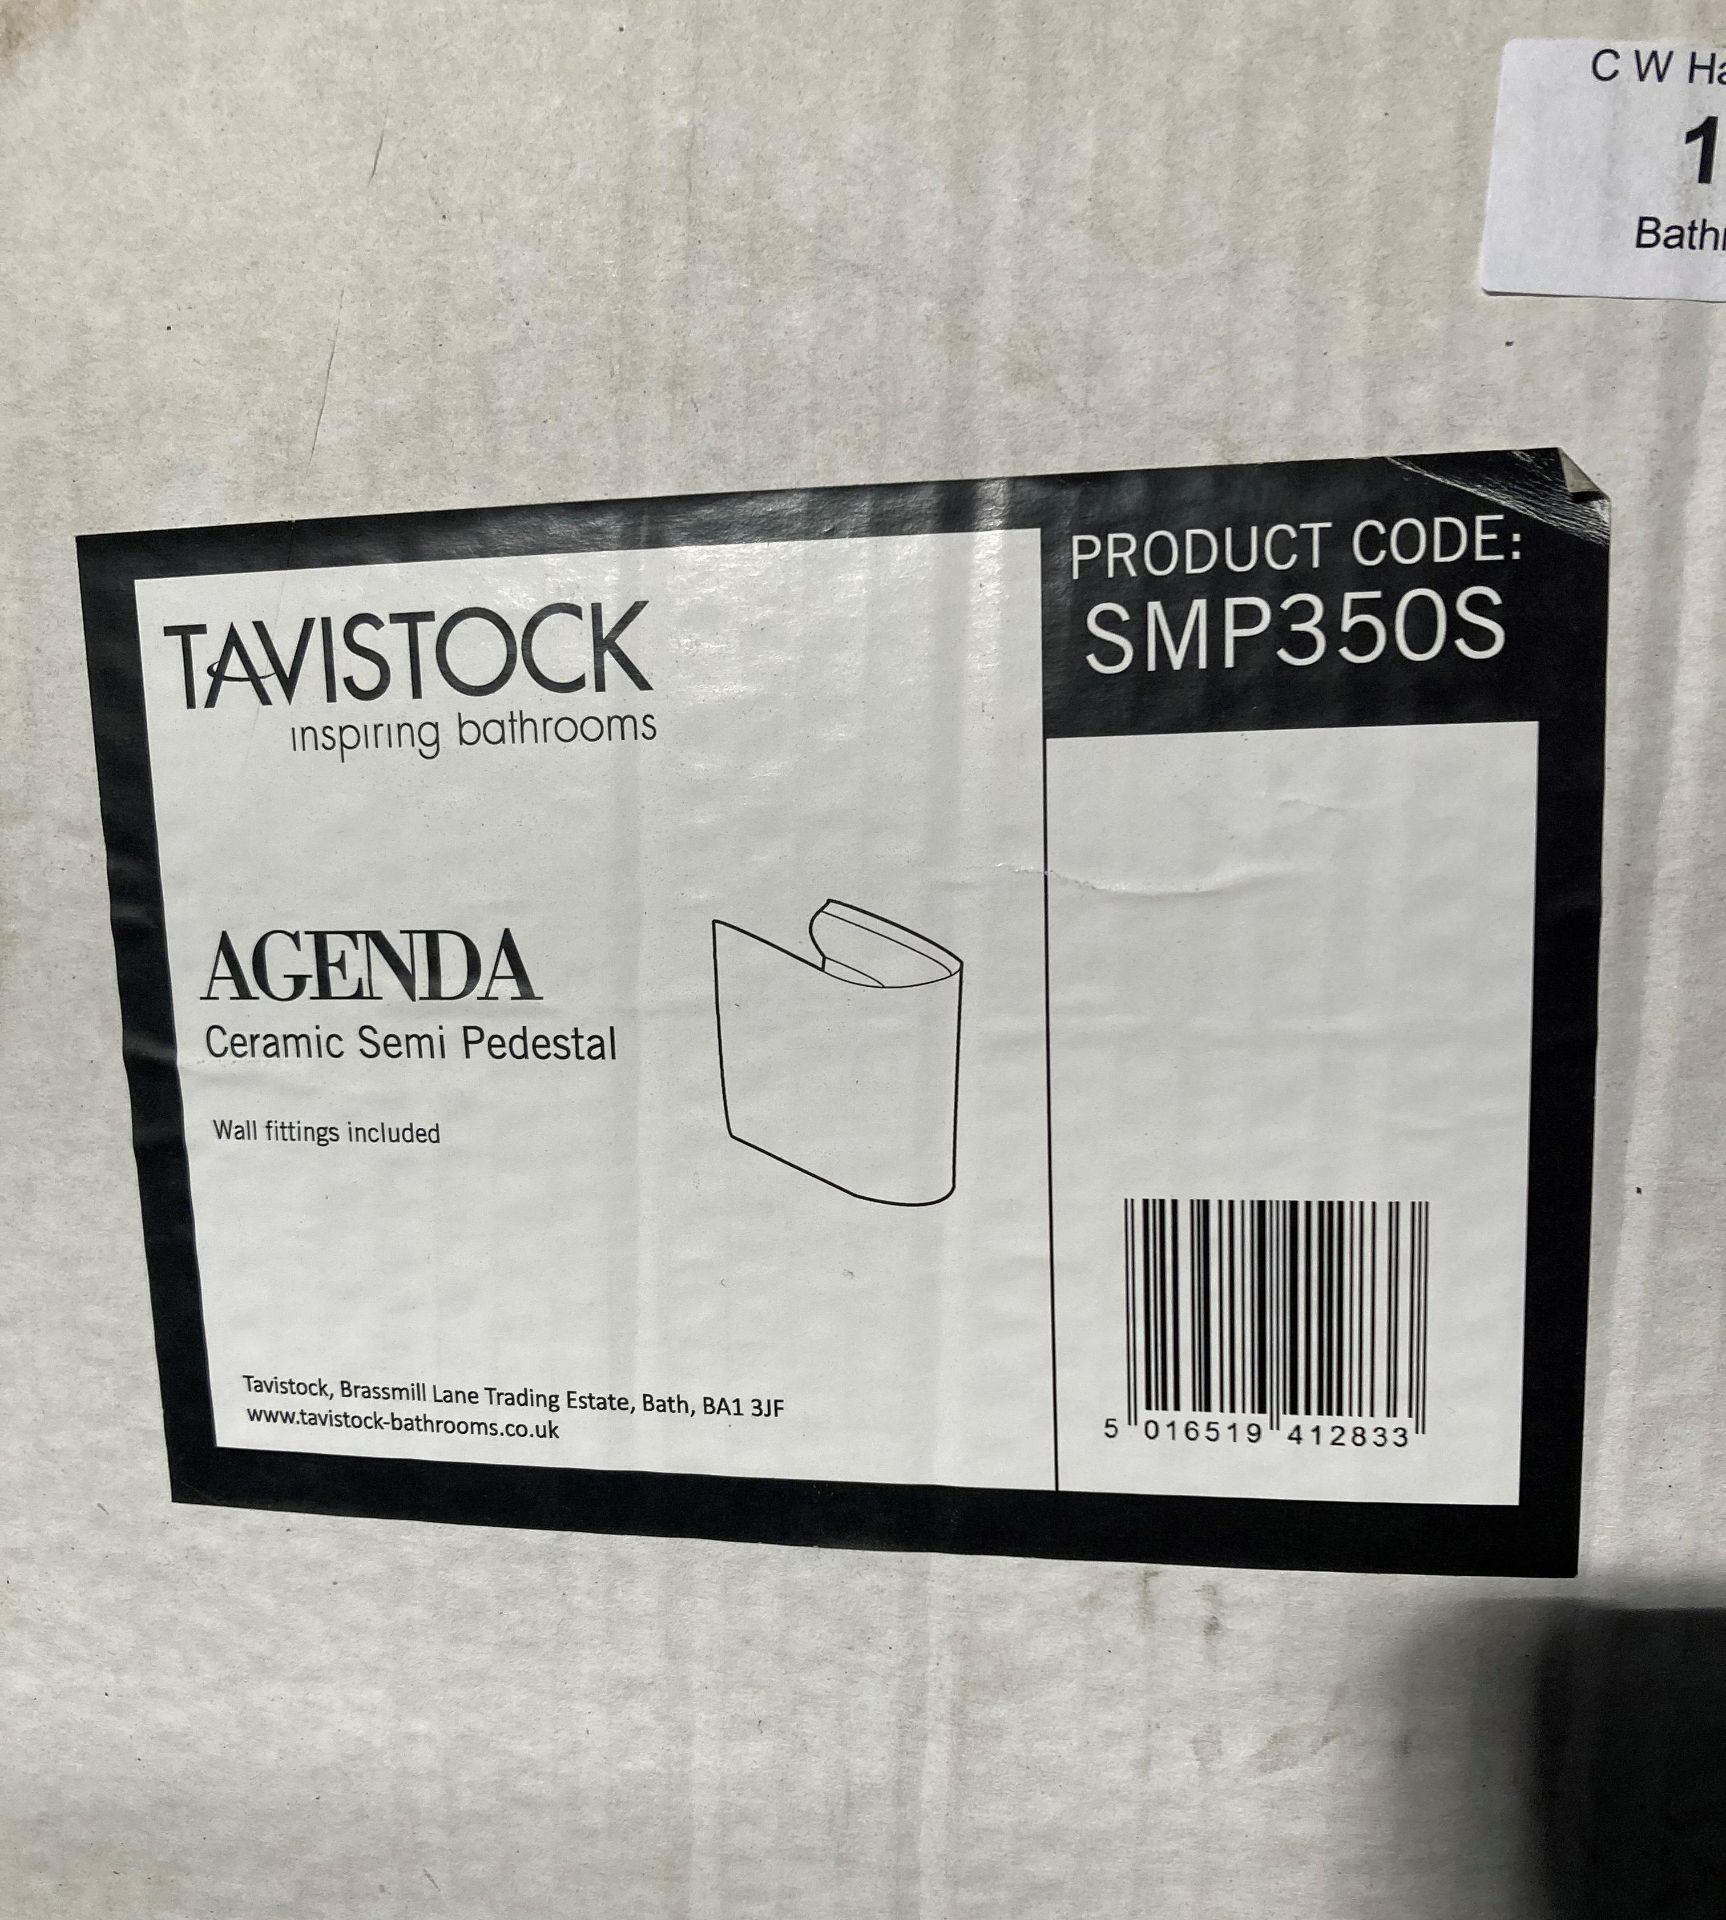 Tavistock Agenda ceramic semi-pedestal in white product code SMP350S new and sealed box (saleroom